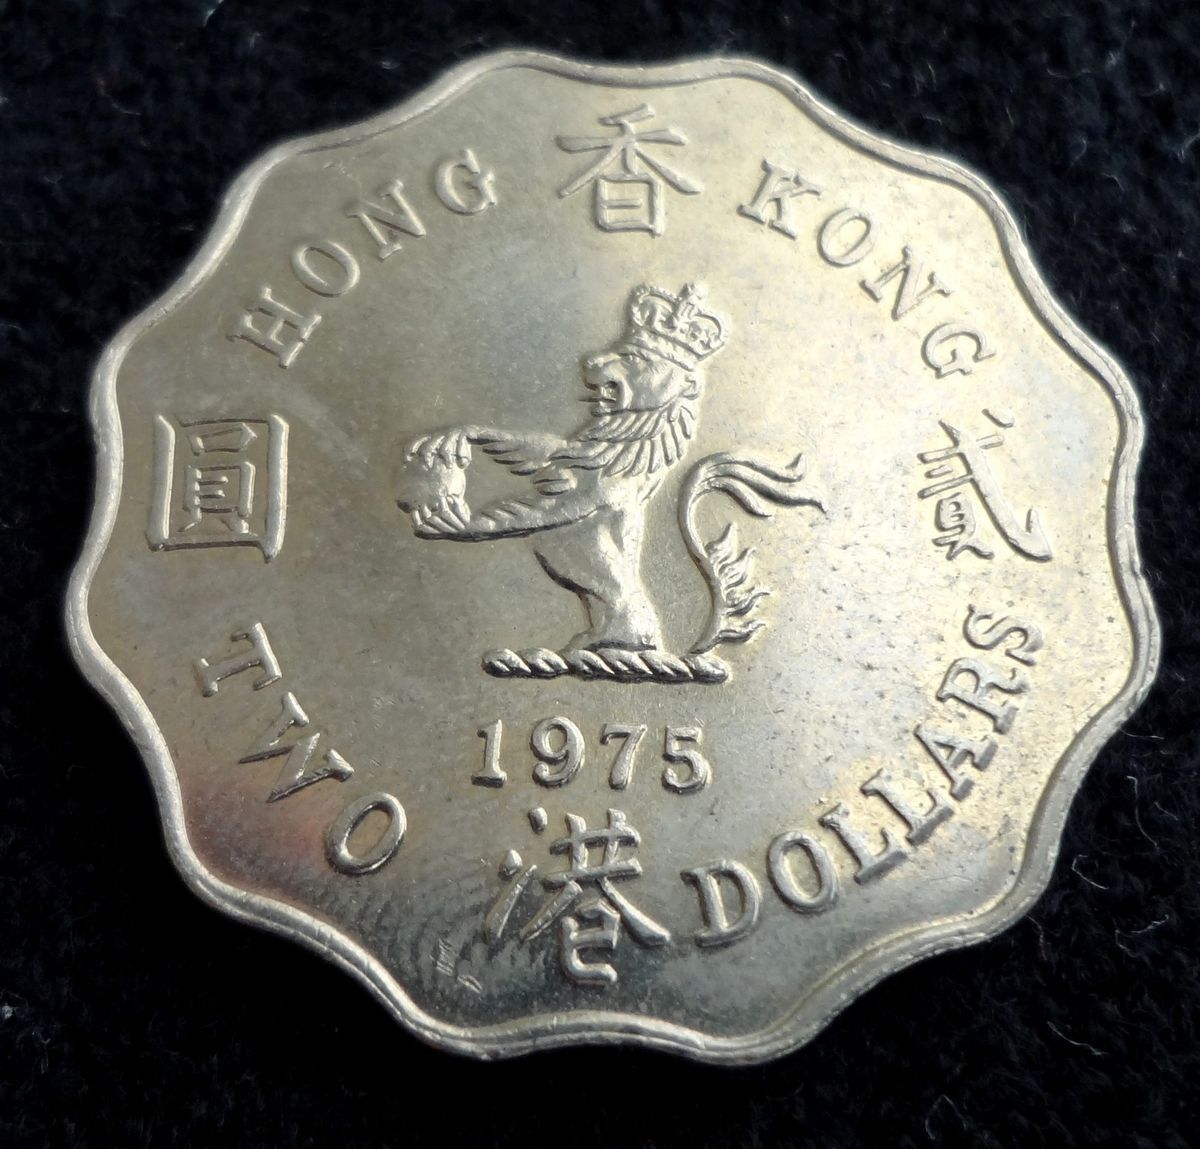  Dollars Coin 1975 Lion World Coins Asian Coins Hong Kong Coins